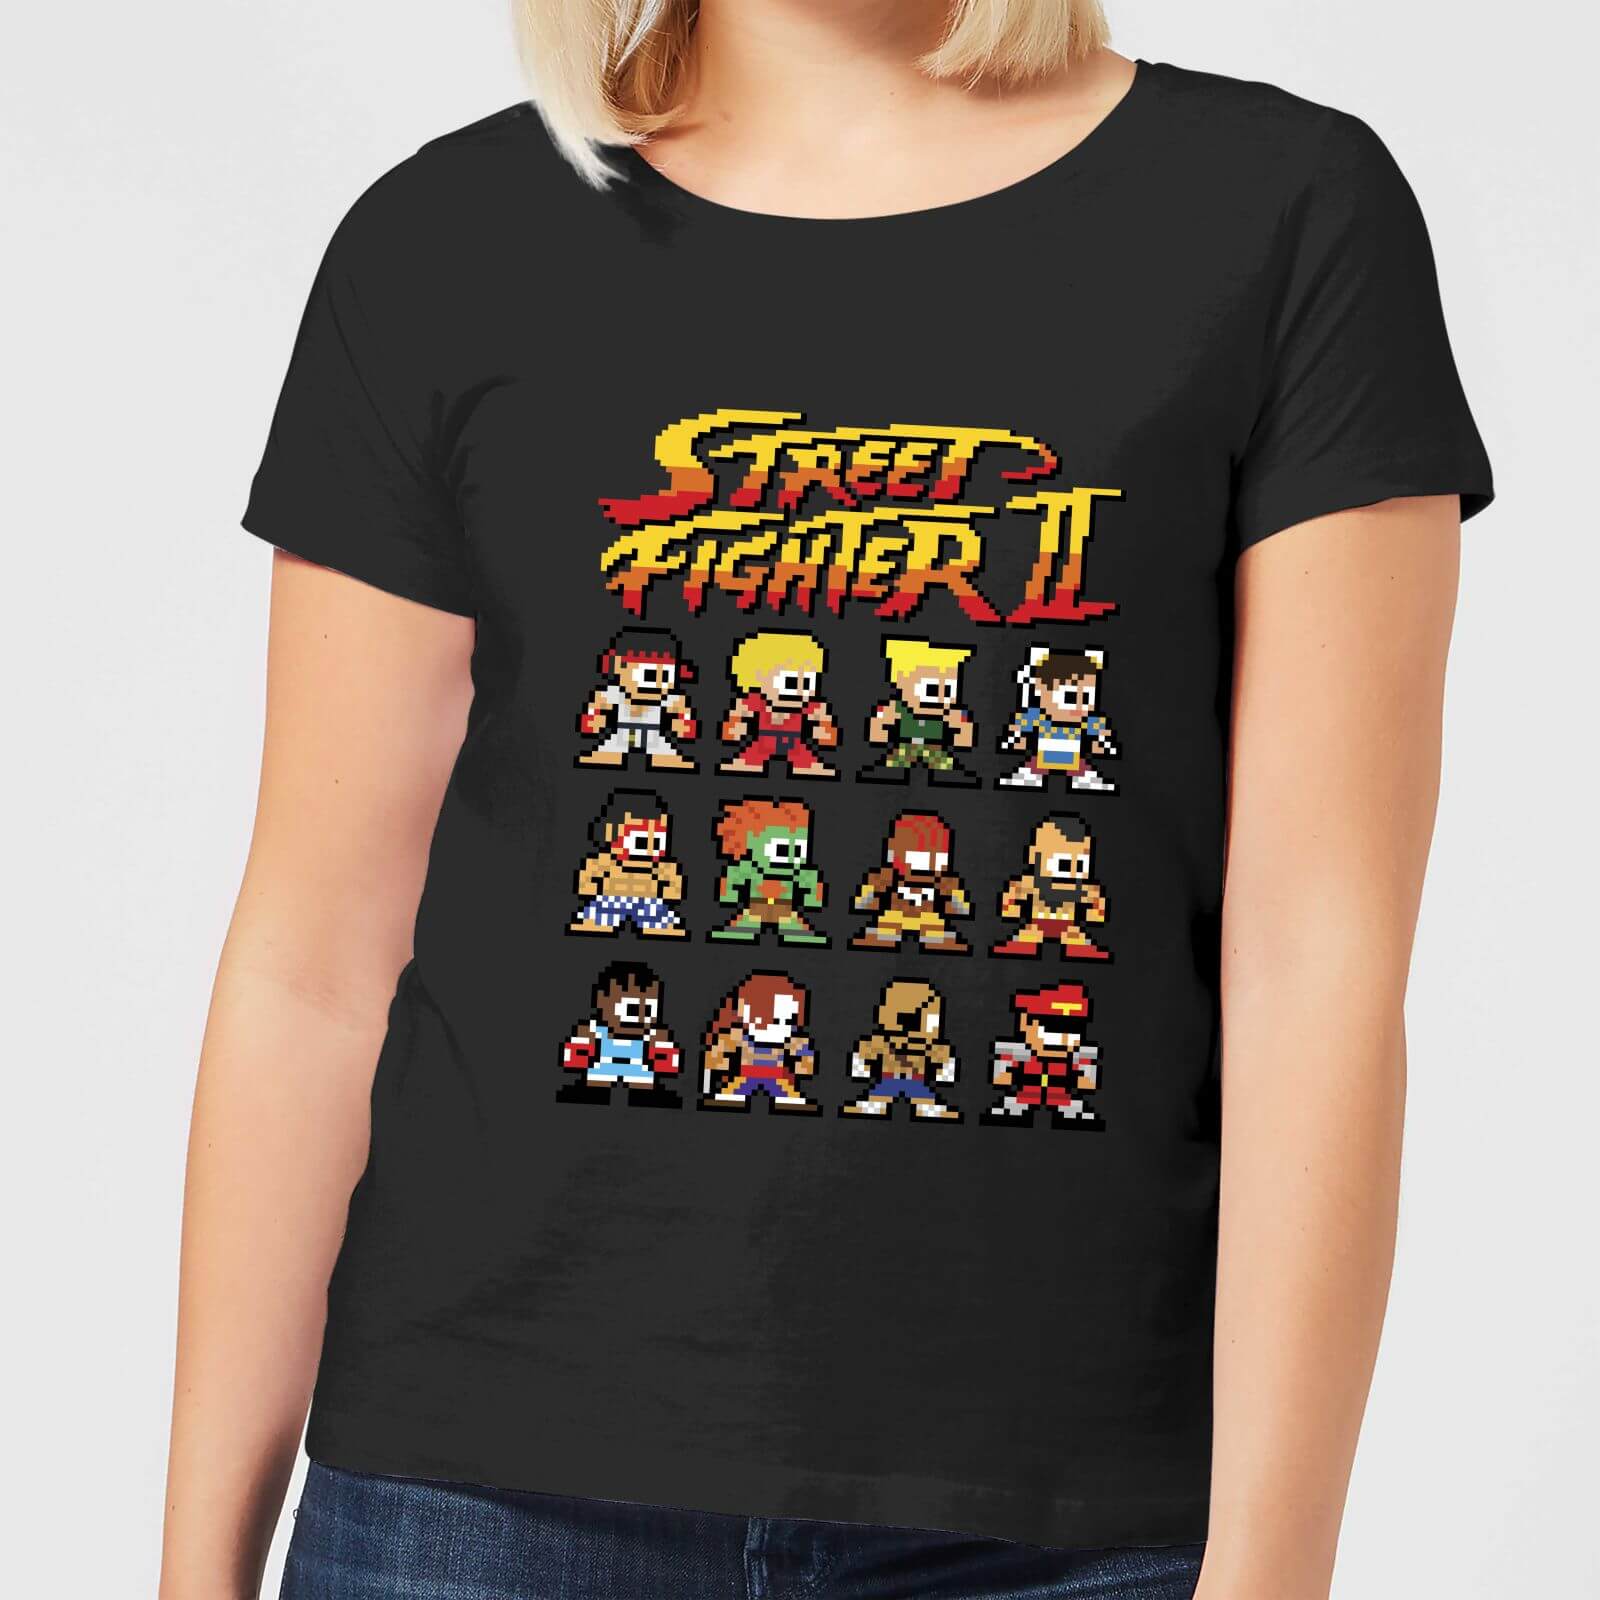 Street Fighter 2 Pixel Characters Women's T-Shirt - Black - 4XL